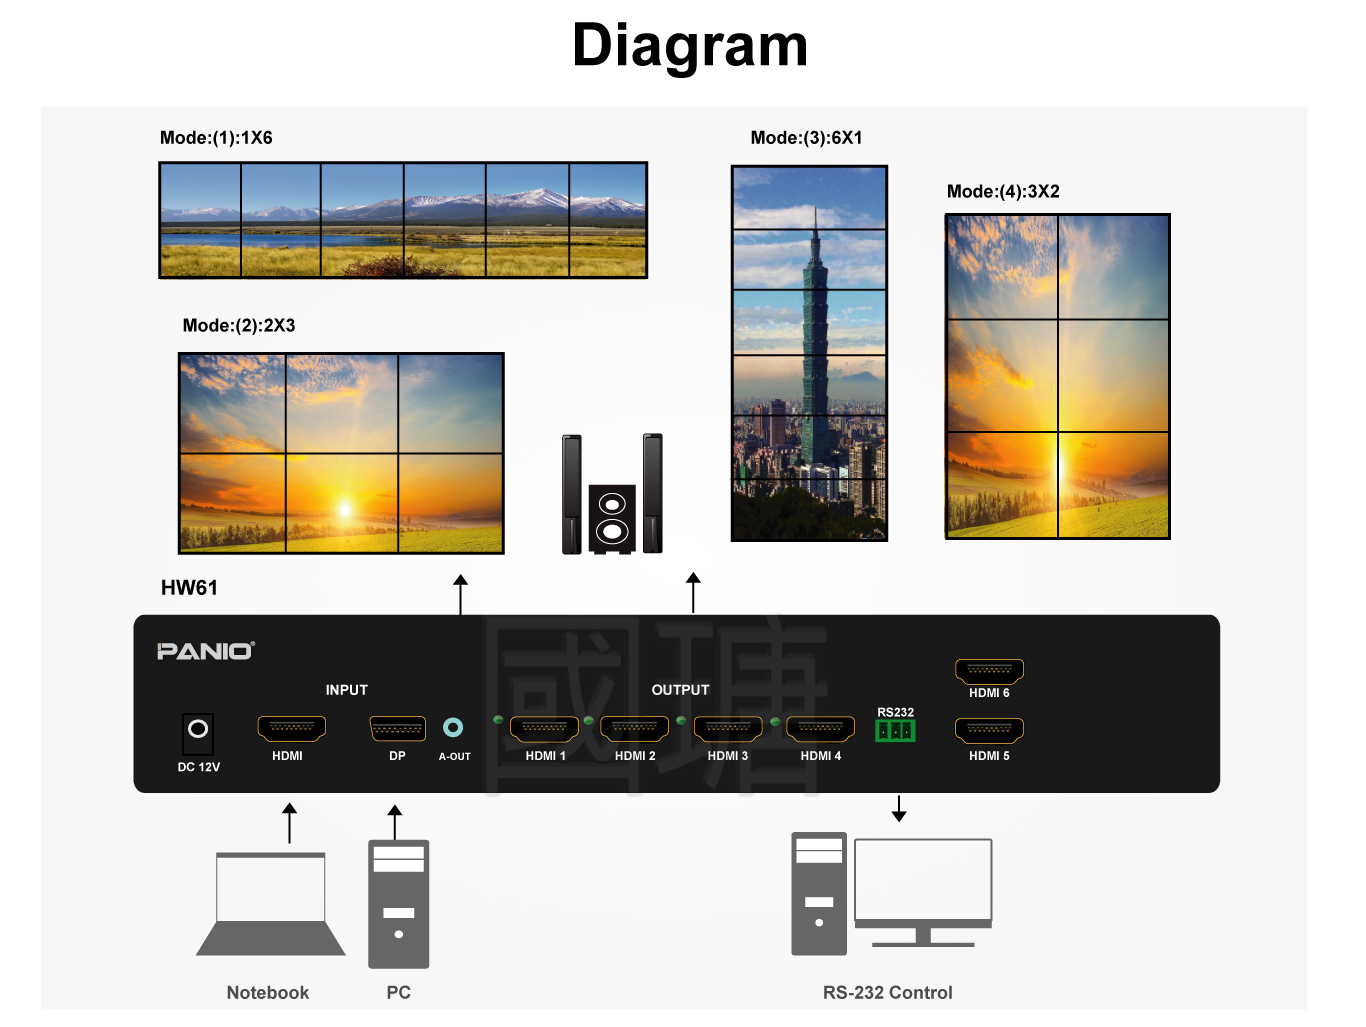 2x3, 3x2, 1x6, 6x1, 1x5, 5x1, Up to 6 screens, vertical or horizontal TV wall